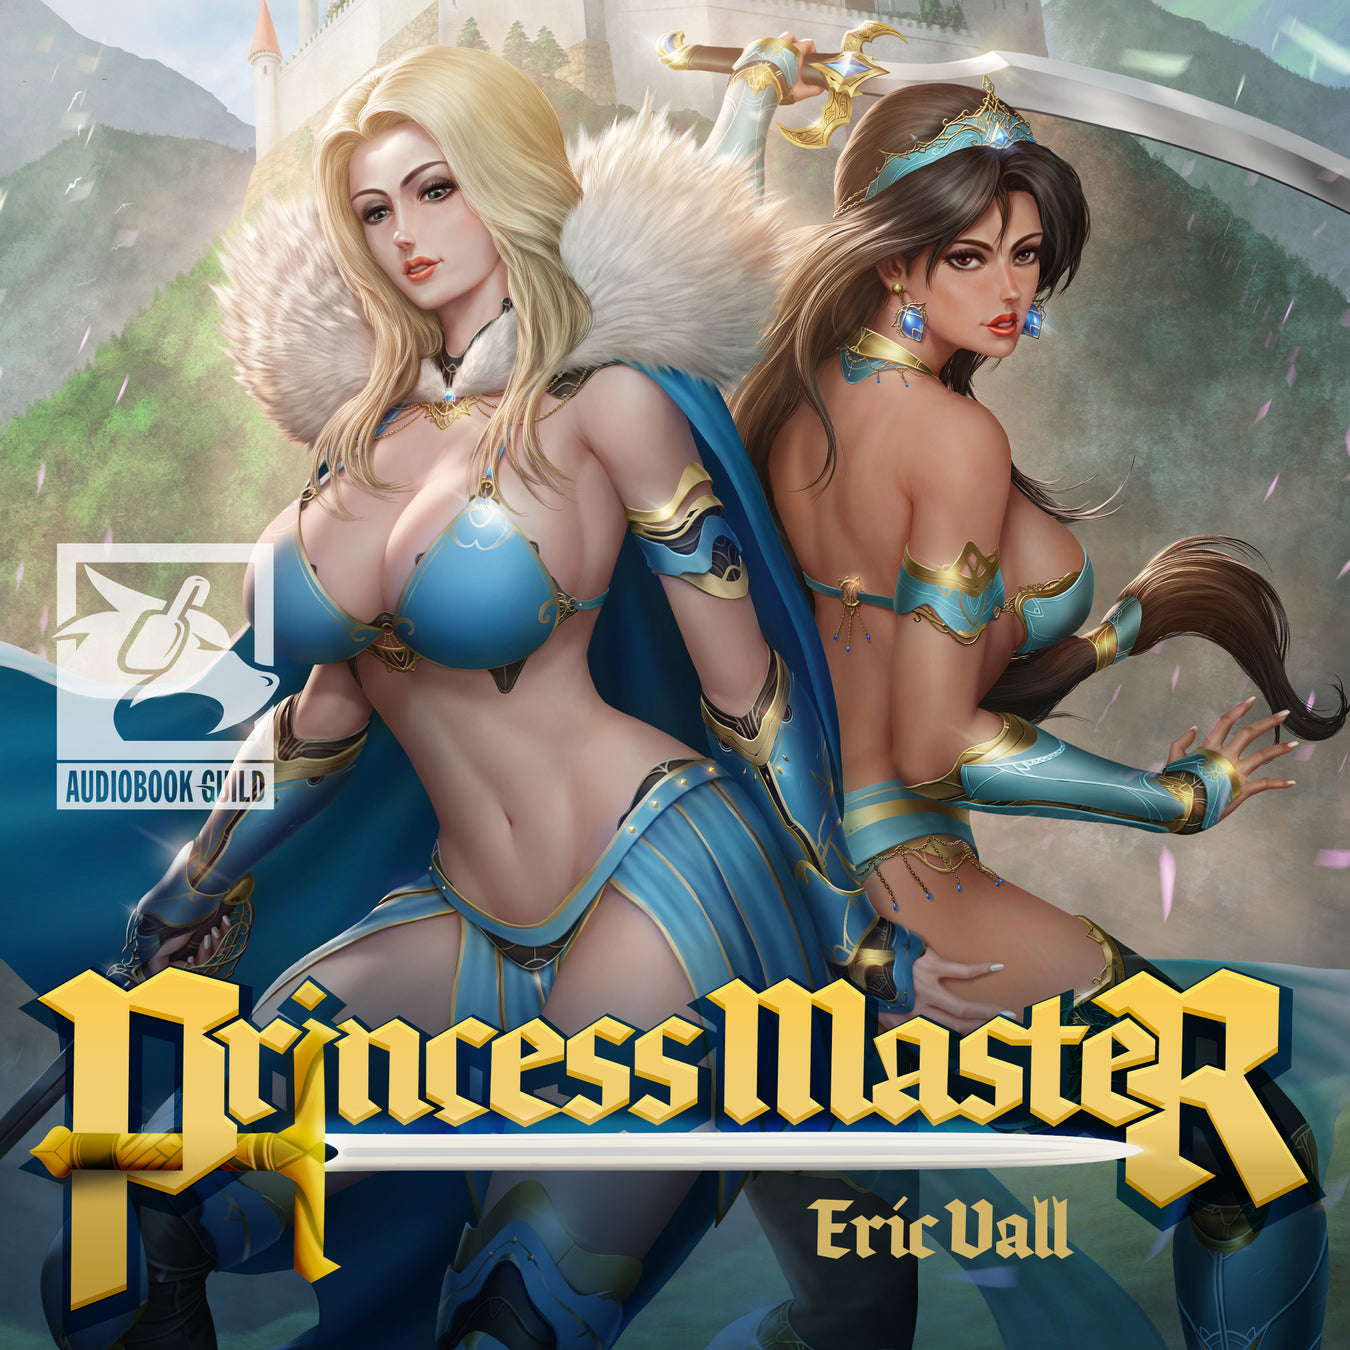 Princess Master by Eric Vall